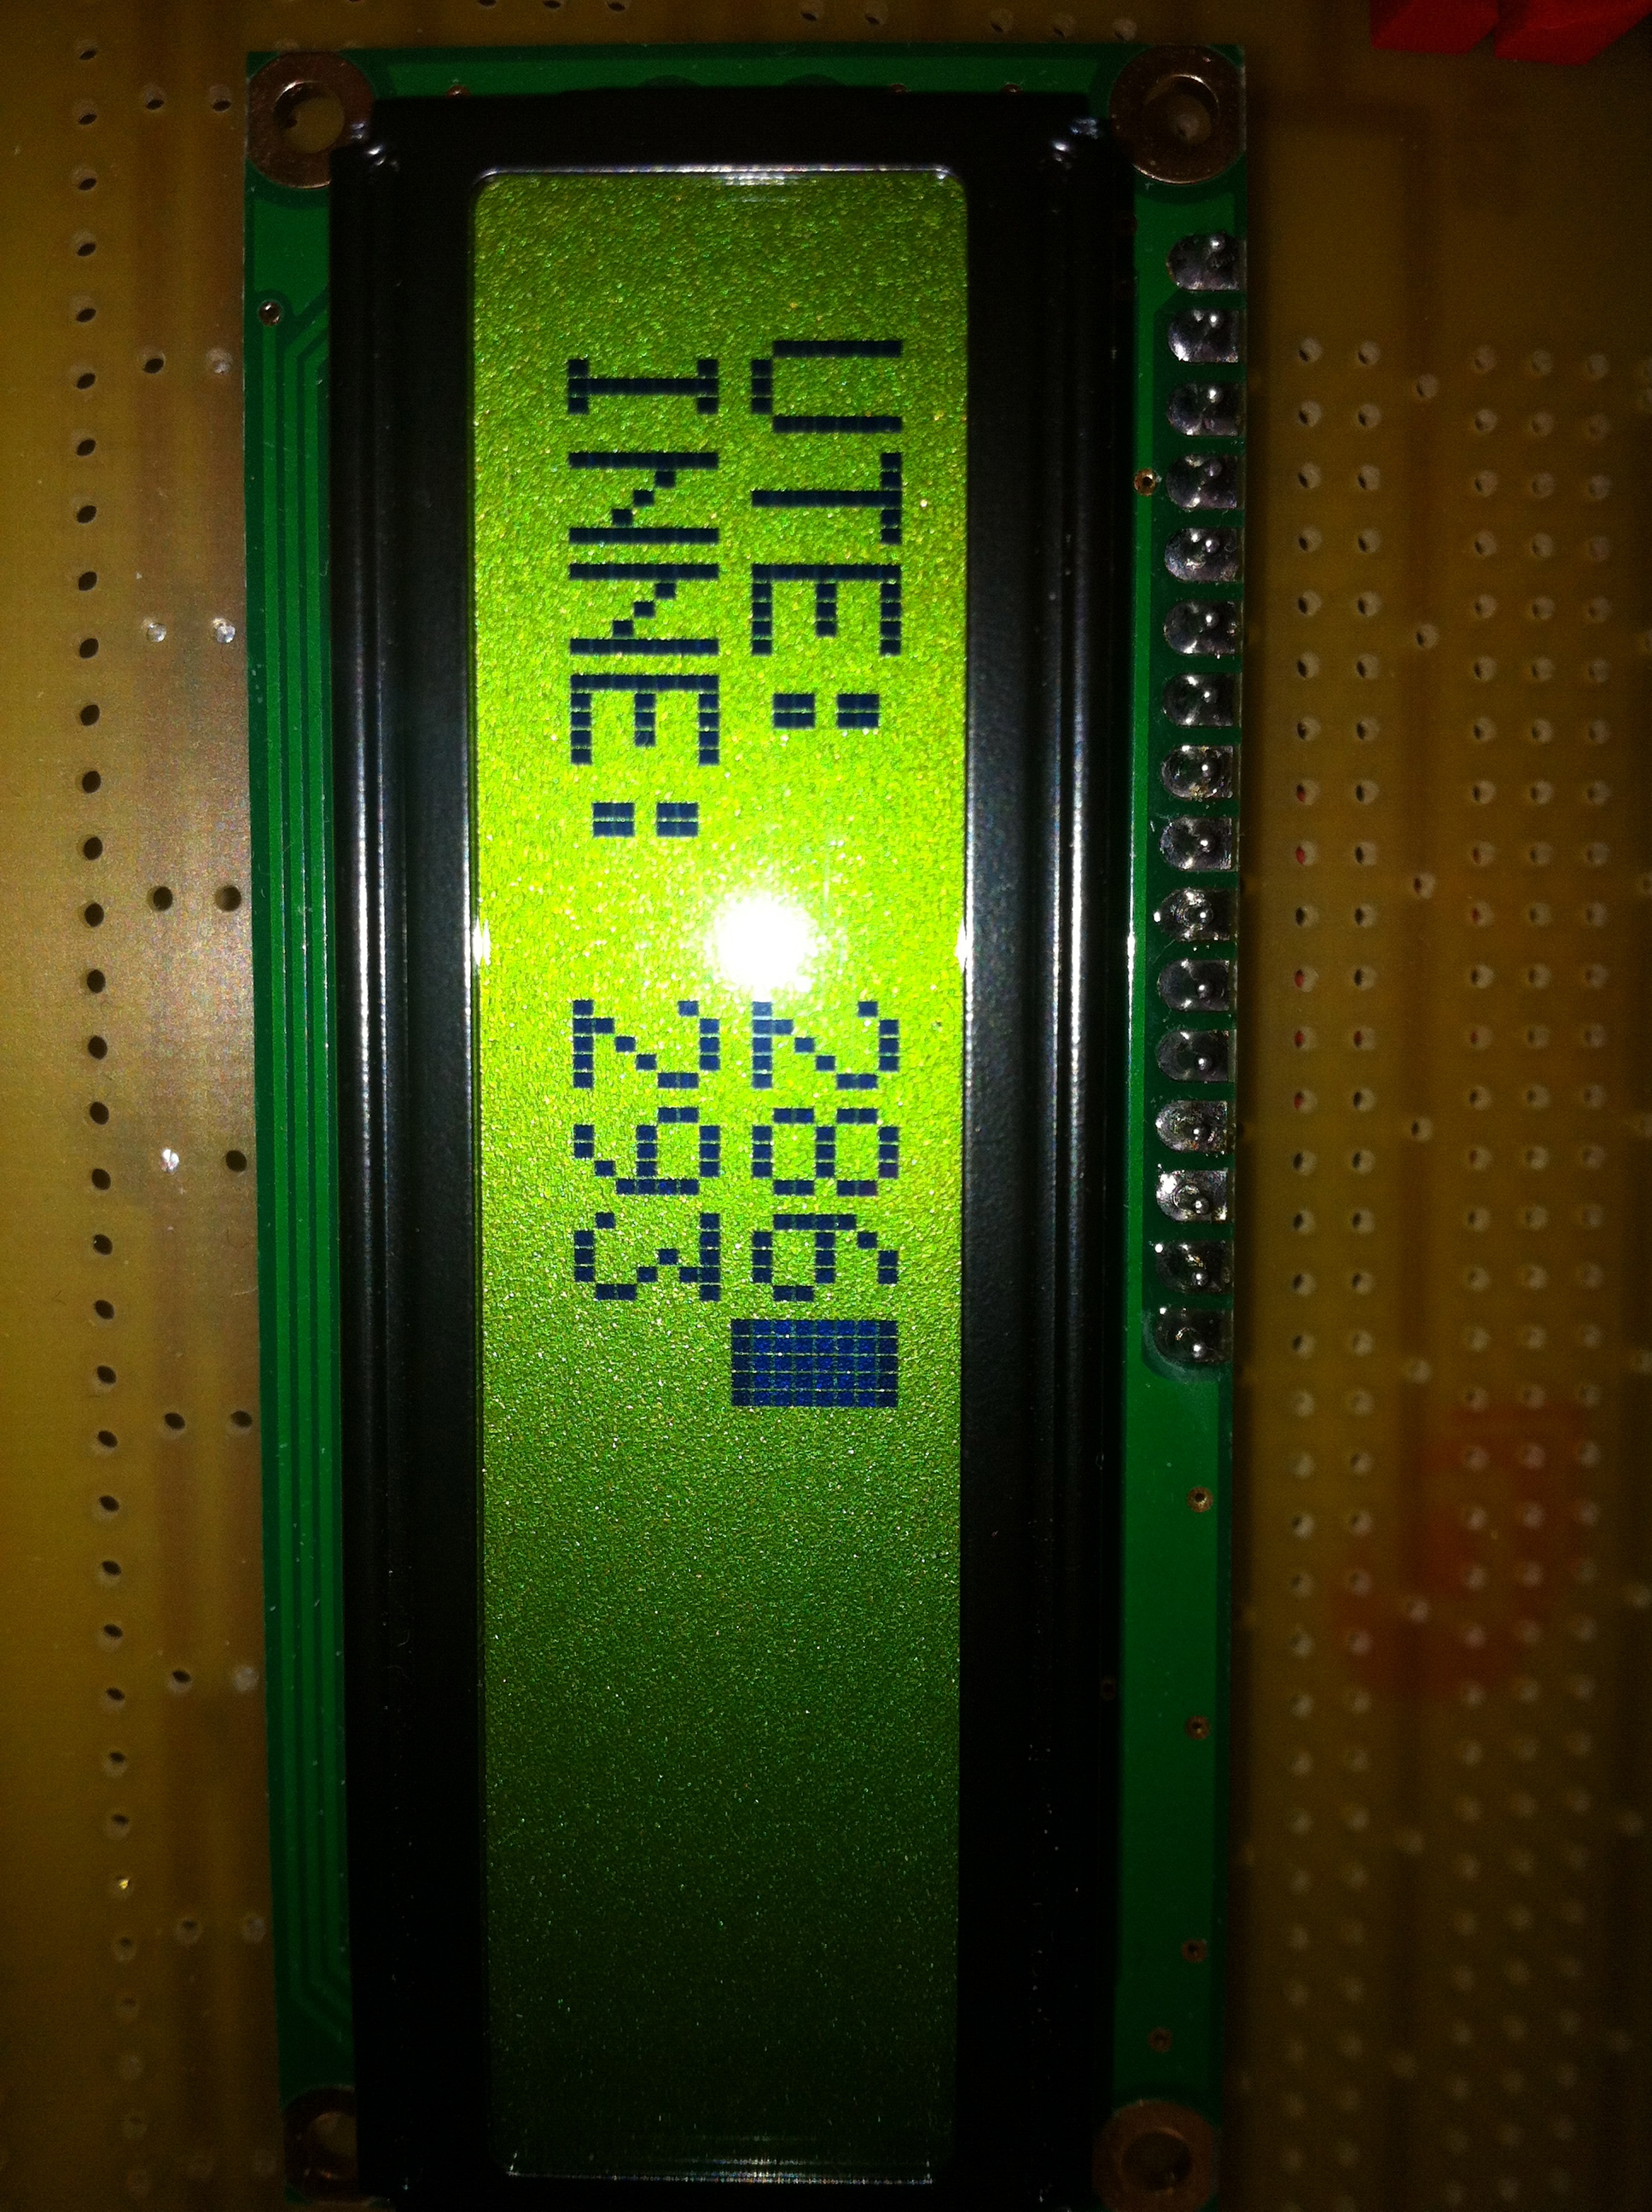 Figur 3: Normalläge på displayen. Figur 4: Hur displayen ser ut då ett min- alarm ställs in. Figur 5: Hur displayen ser ut då ett max- alarm ställs in.